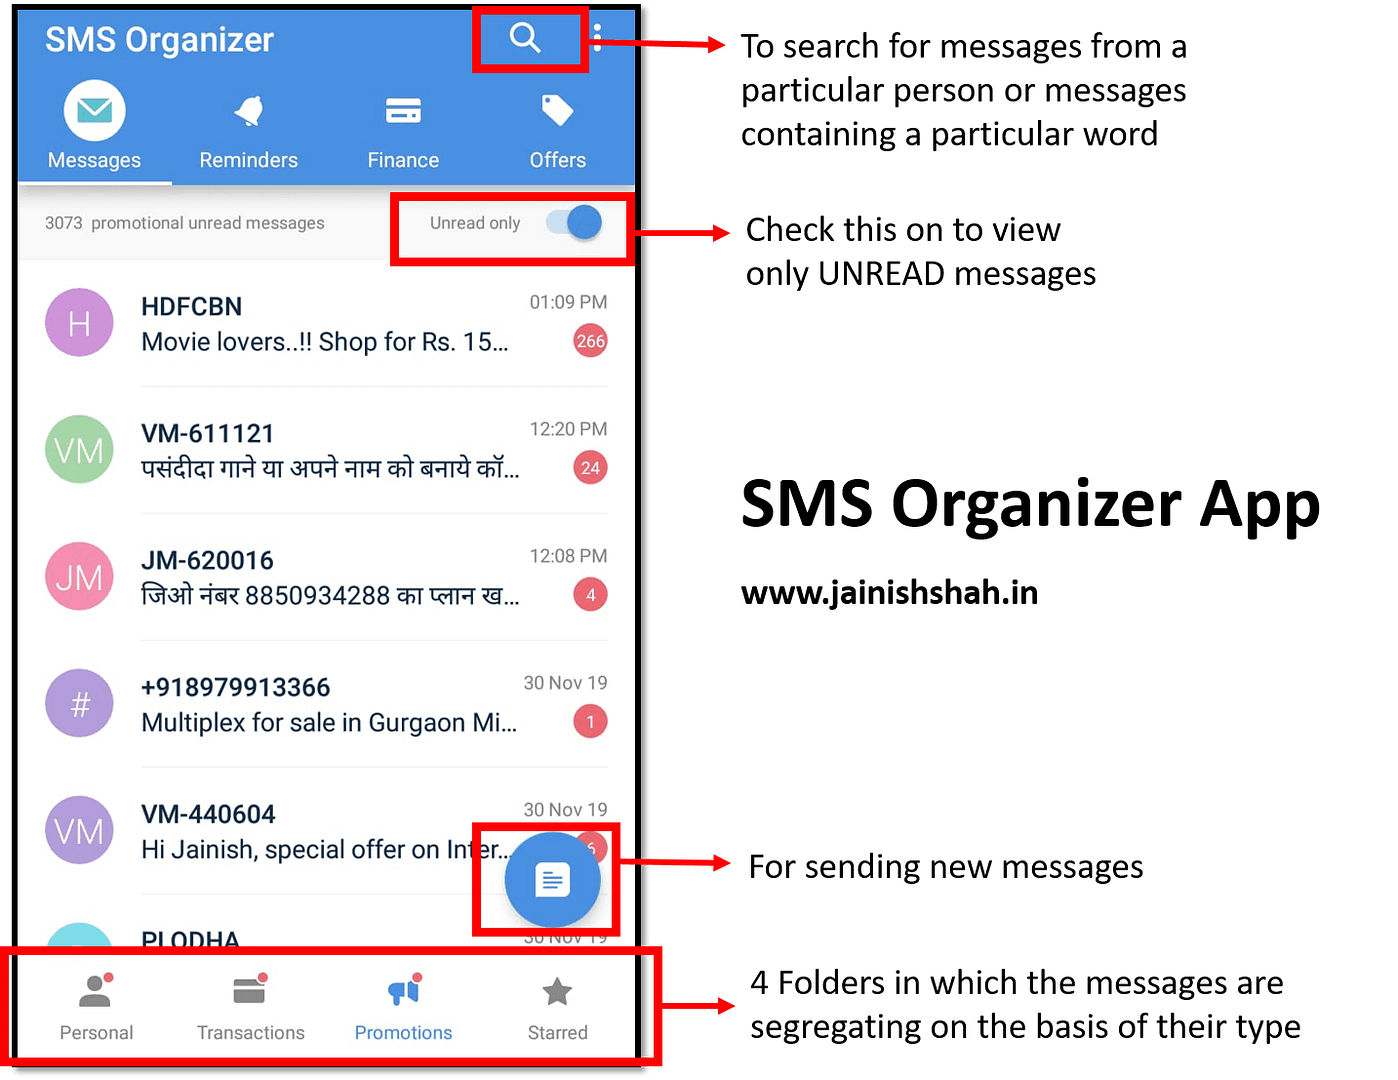 SMS Organizer App Interface